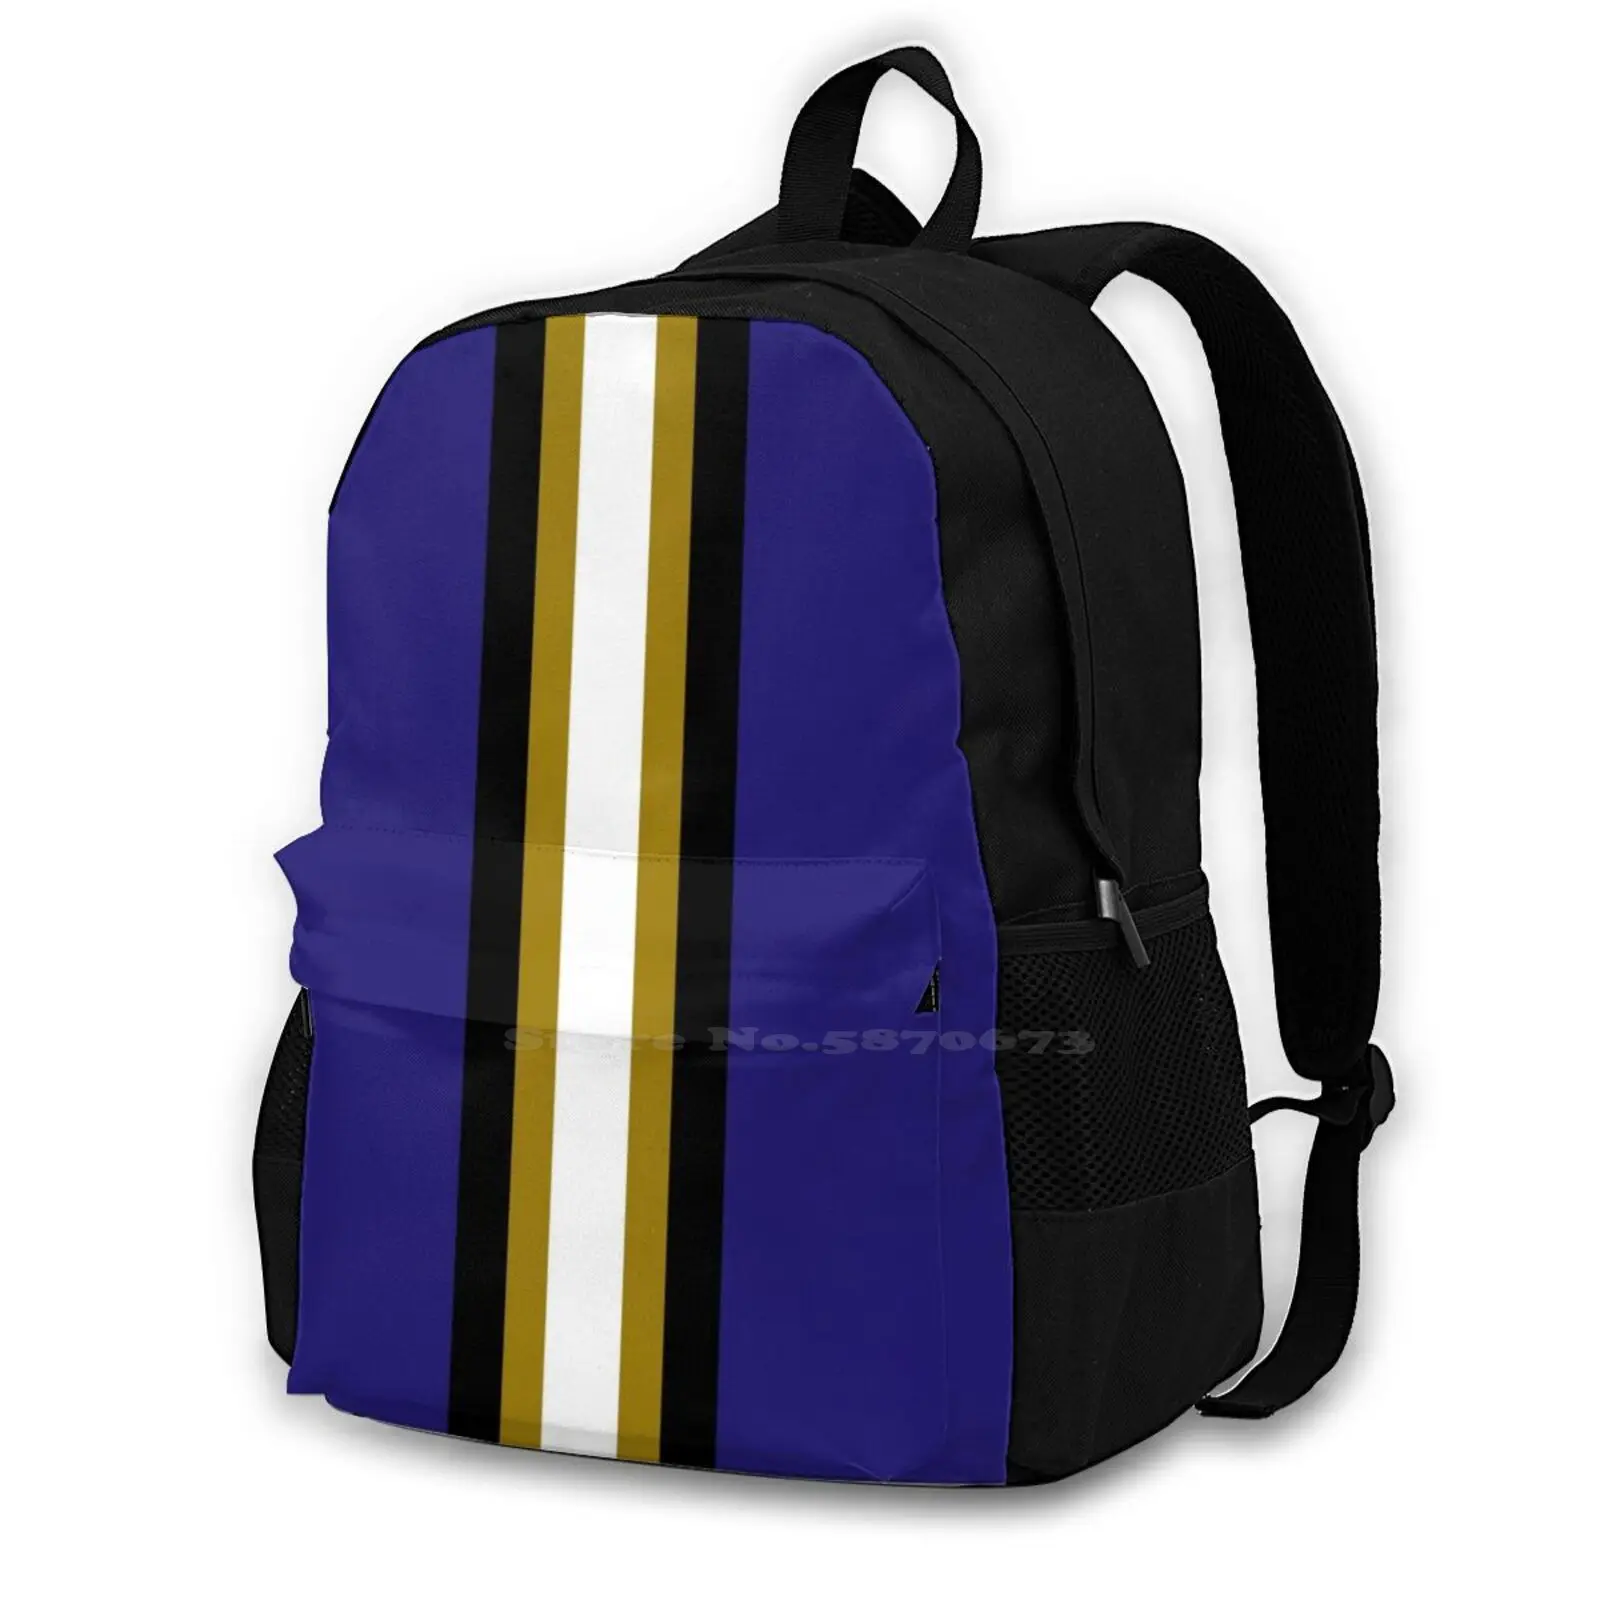 

Baltimore School Bag Big Capacity Backpack Laptop 15 Inch Baltimore Fans Baltimore Football Ravens Fans Purple Gold Black